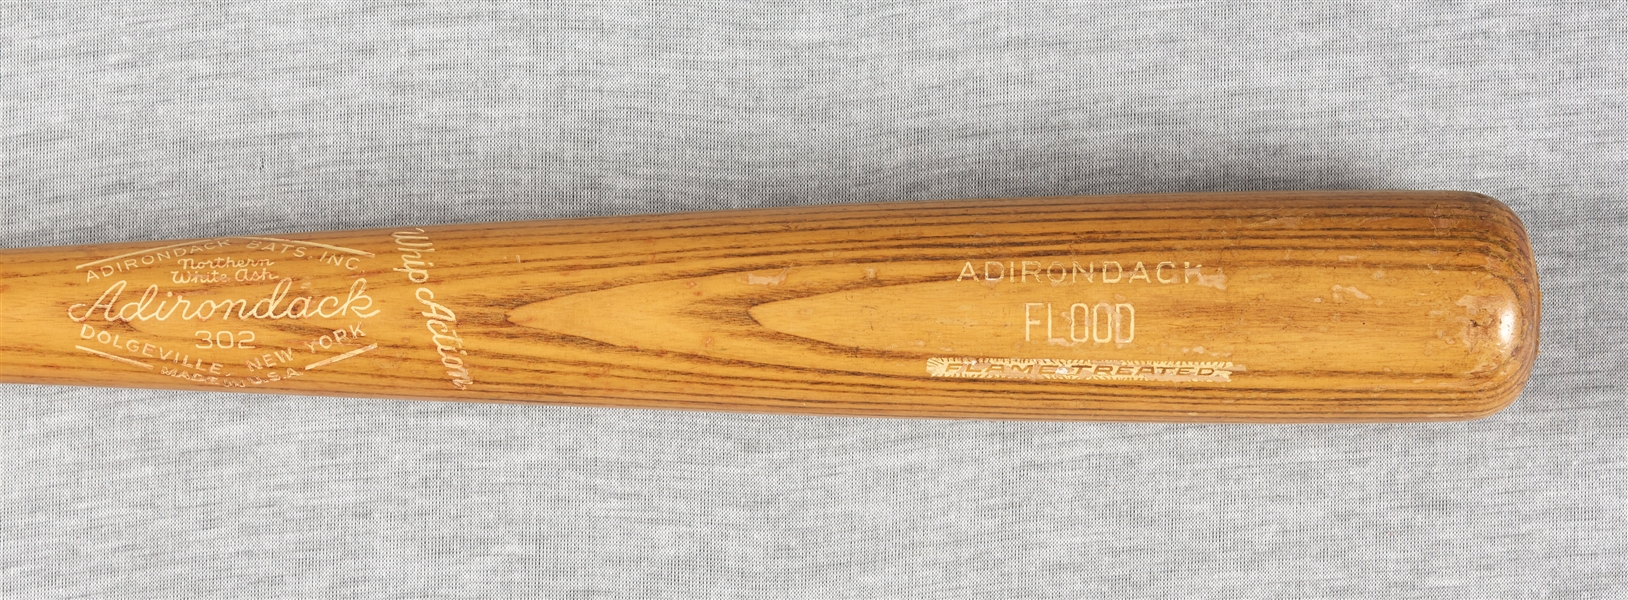 Curt Flood 1961-63 Game-Used Adirondack Bat (PSA/DNA GU 9.5)